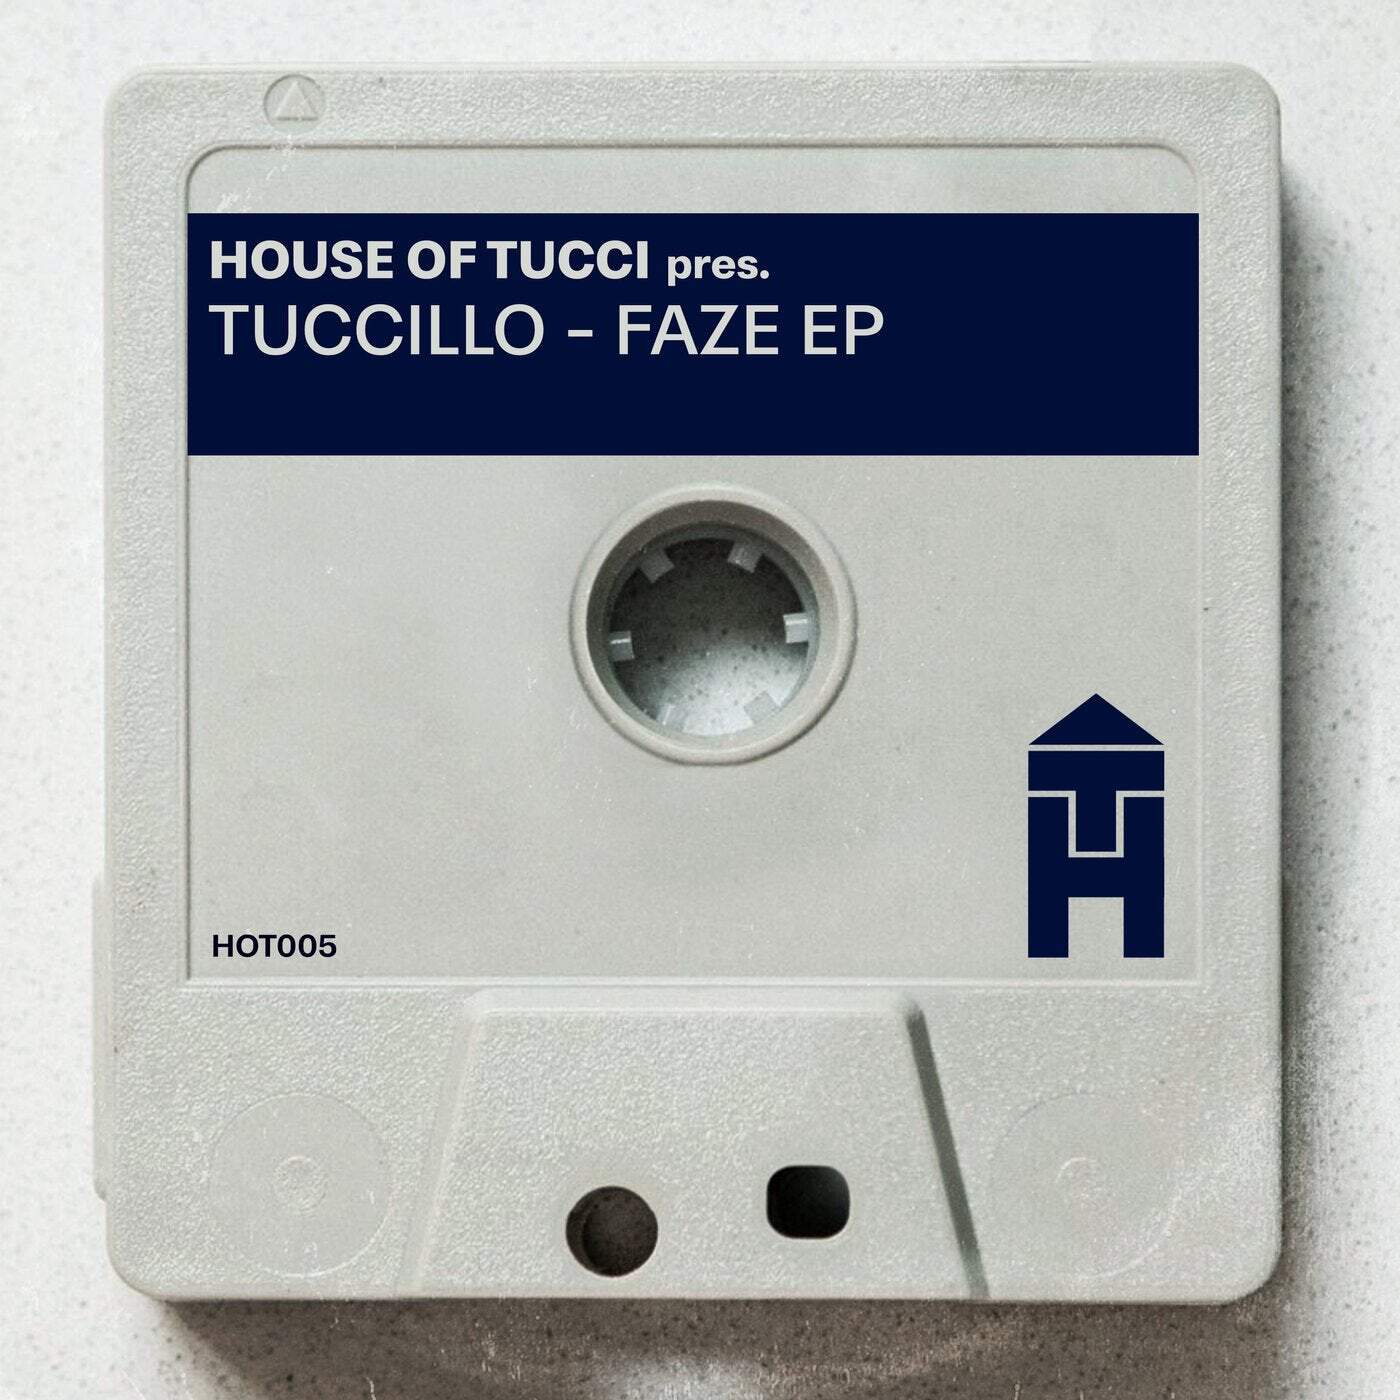 Download Tuccillo - Faze EP on Electrobuzz